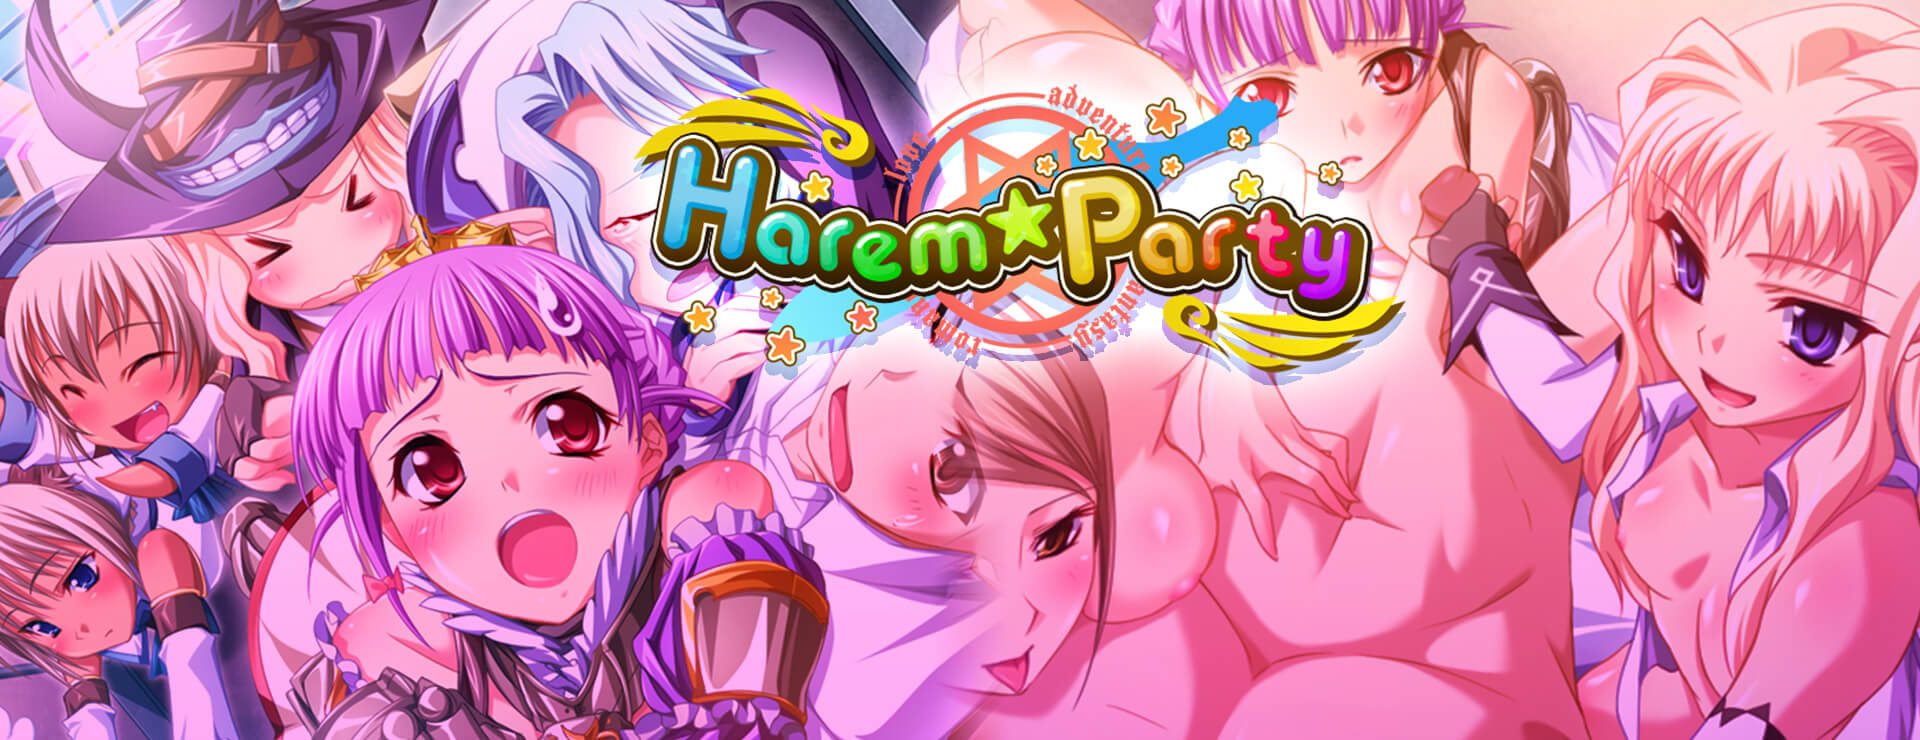 Harem Party - Novela Visual Juego